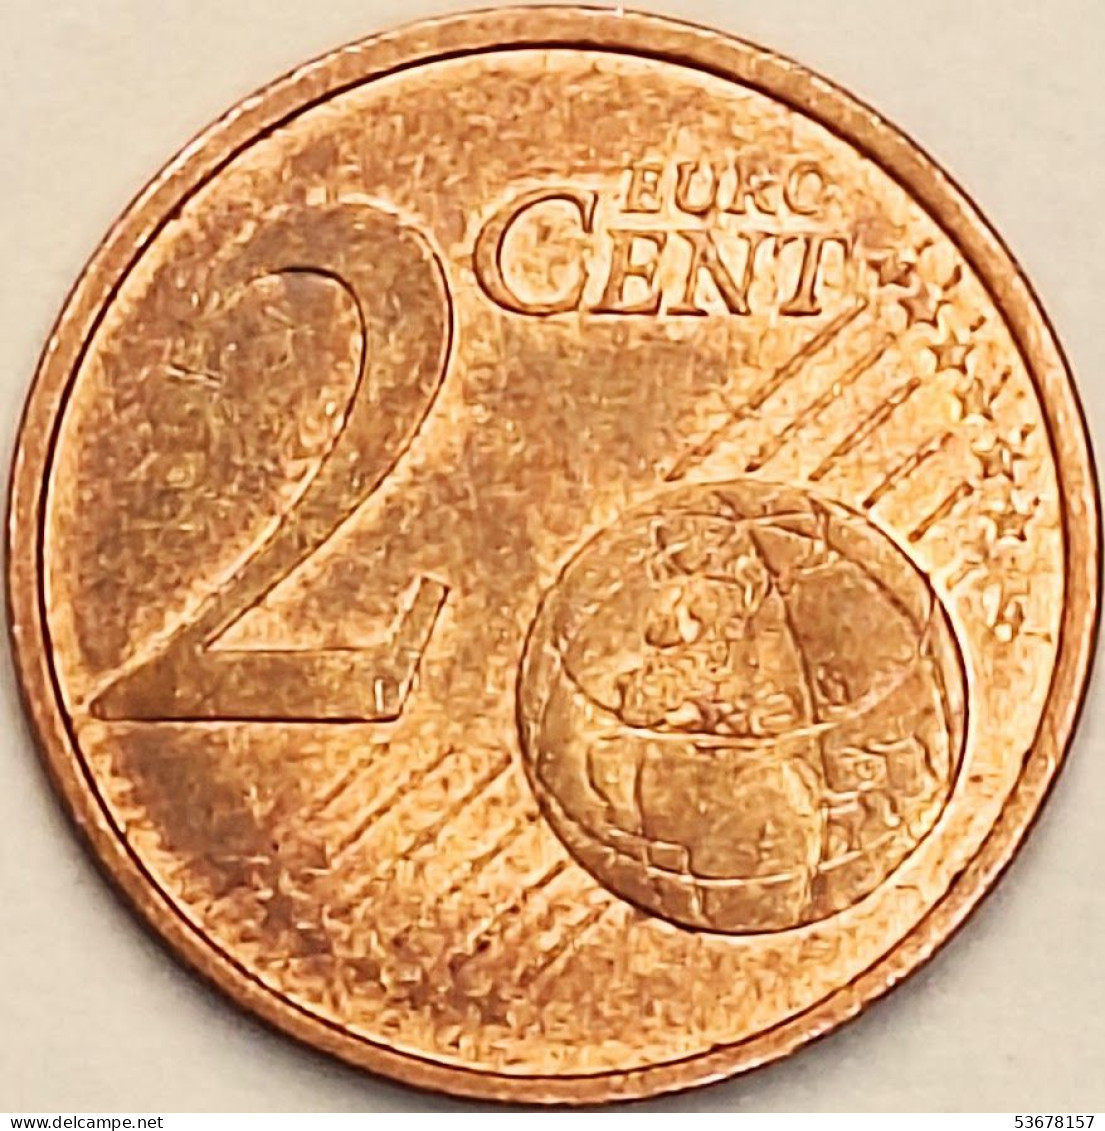 France - 2 Euro Cent 2006, KM# 1283 (#4374) - Frankreich